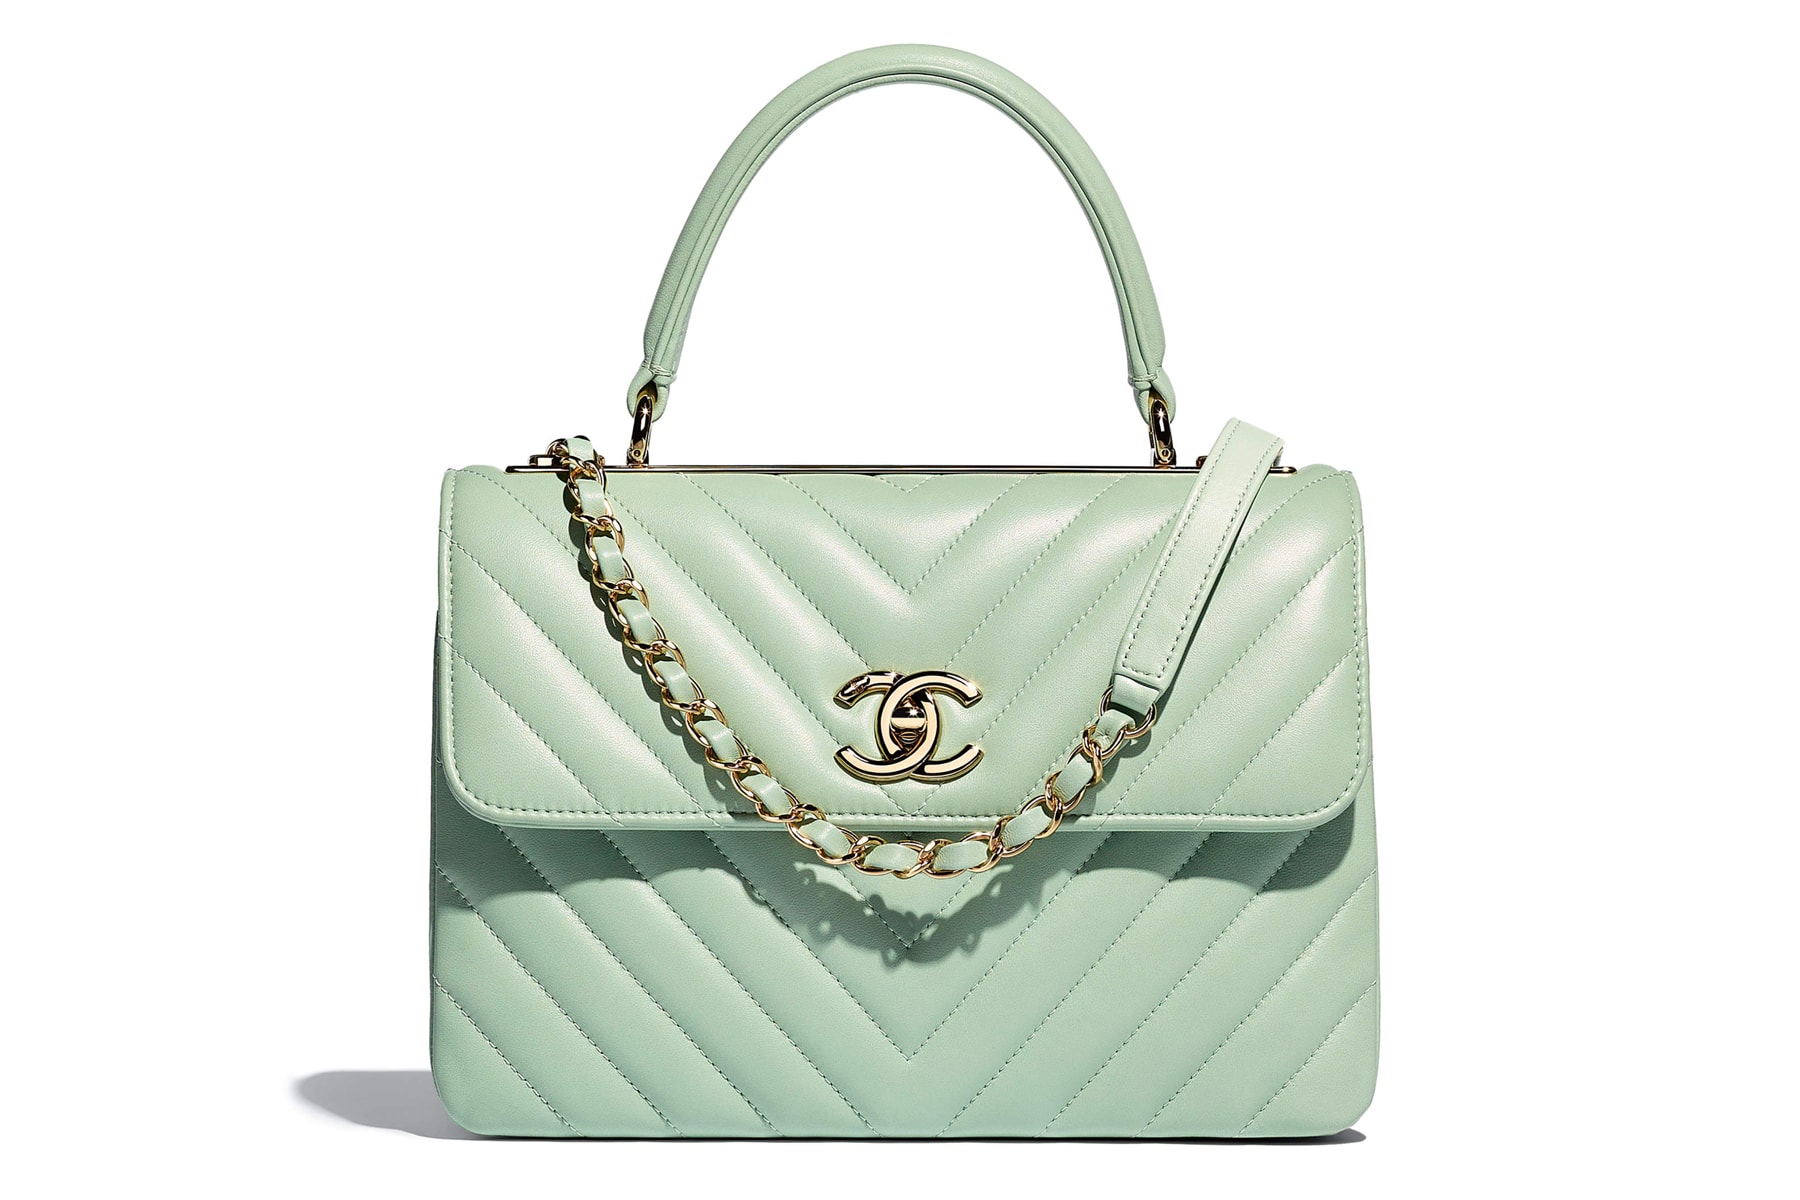 Chanel's Pre-Spring 2018 Handbag Collection